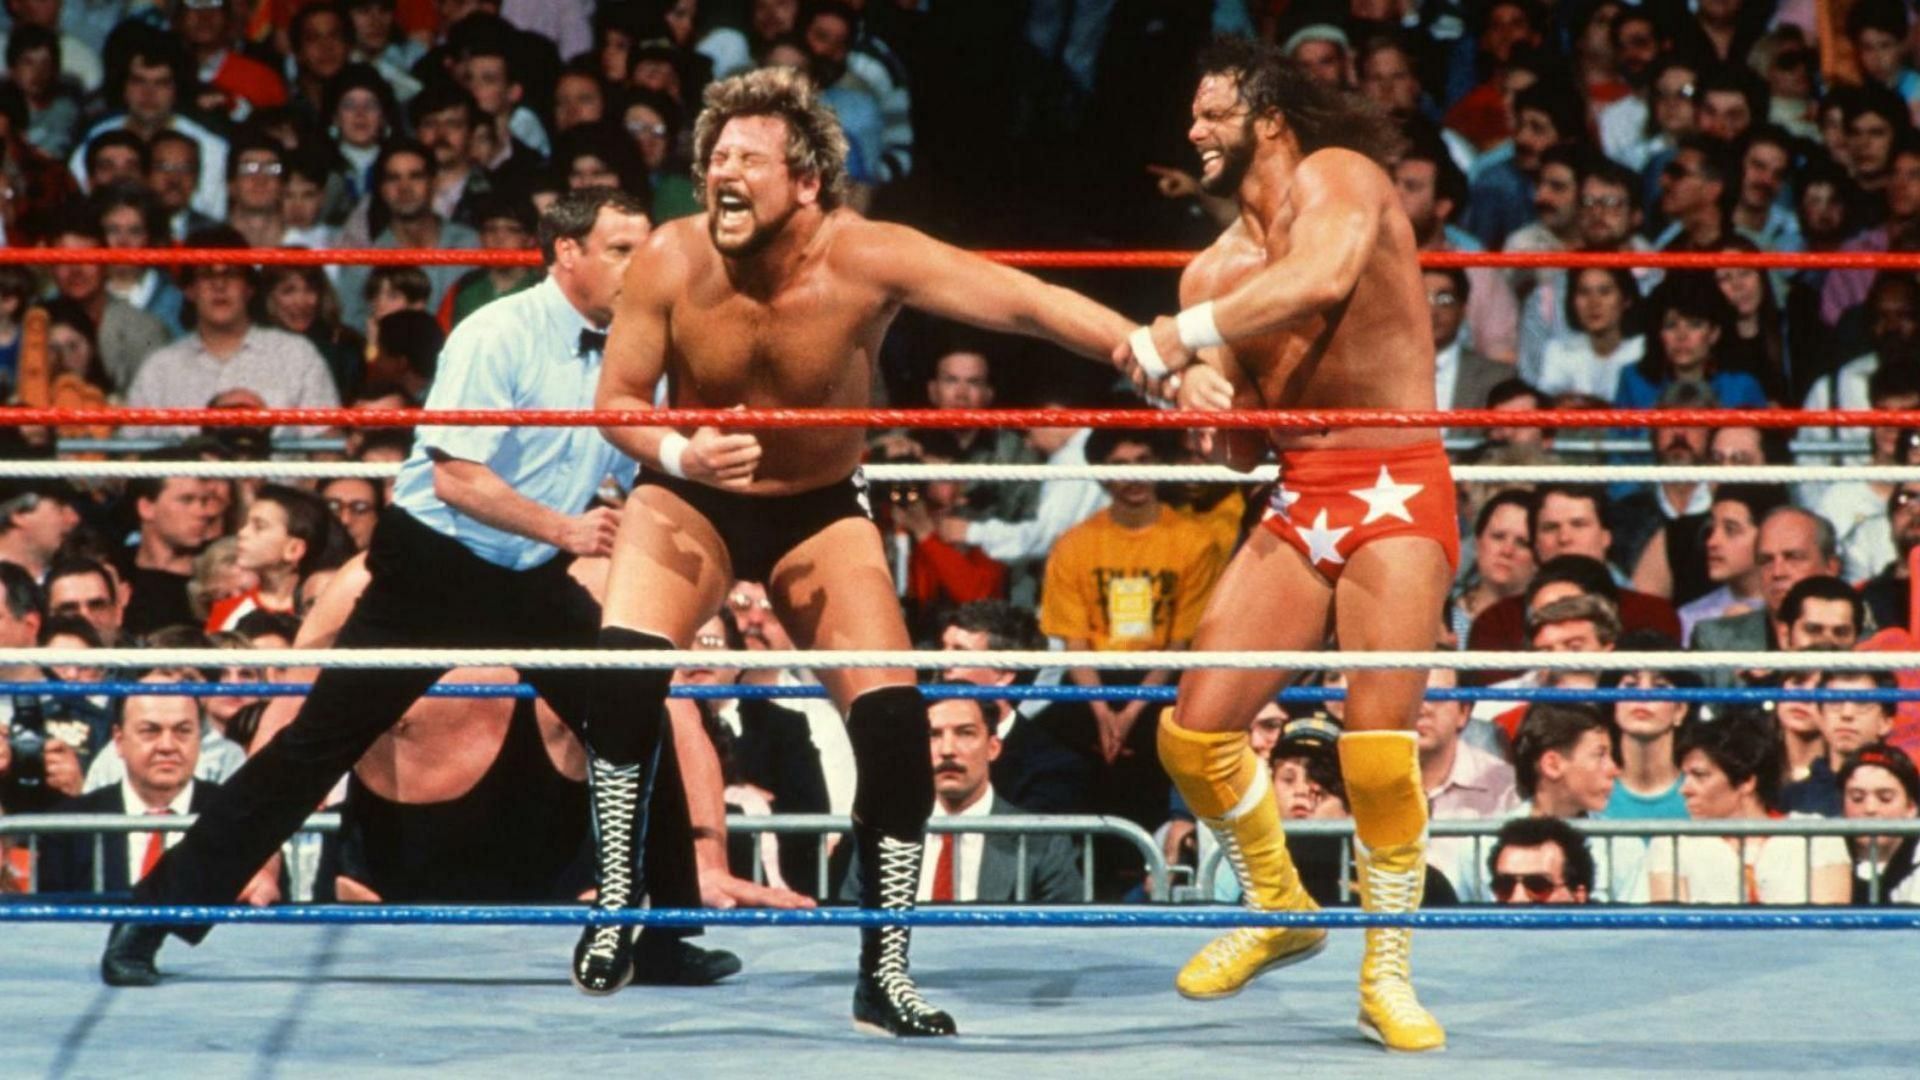 &quot;Macho Man&quot; Randy Savage vs. Ted DiBiase (Image via WWE)